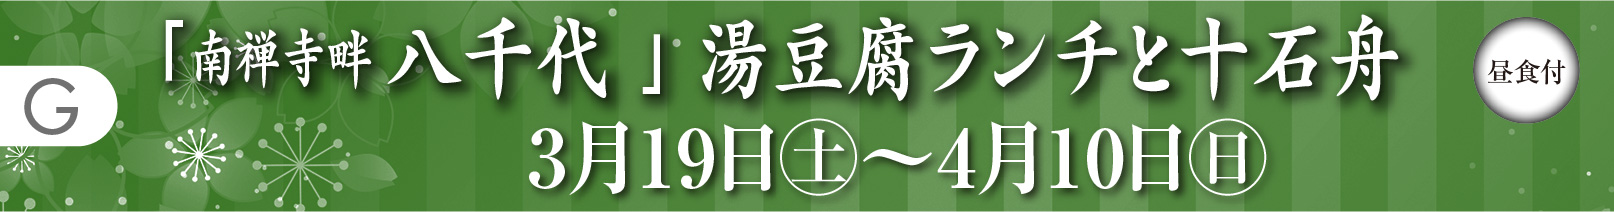 G:南禅寺 順正・湯豆腐コースと岡崎十石舟(昼食付)